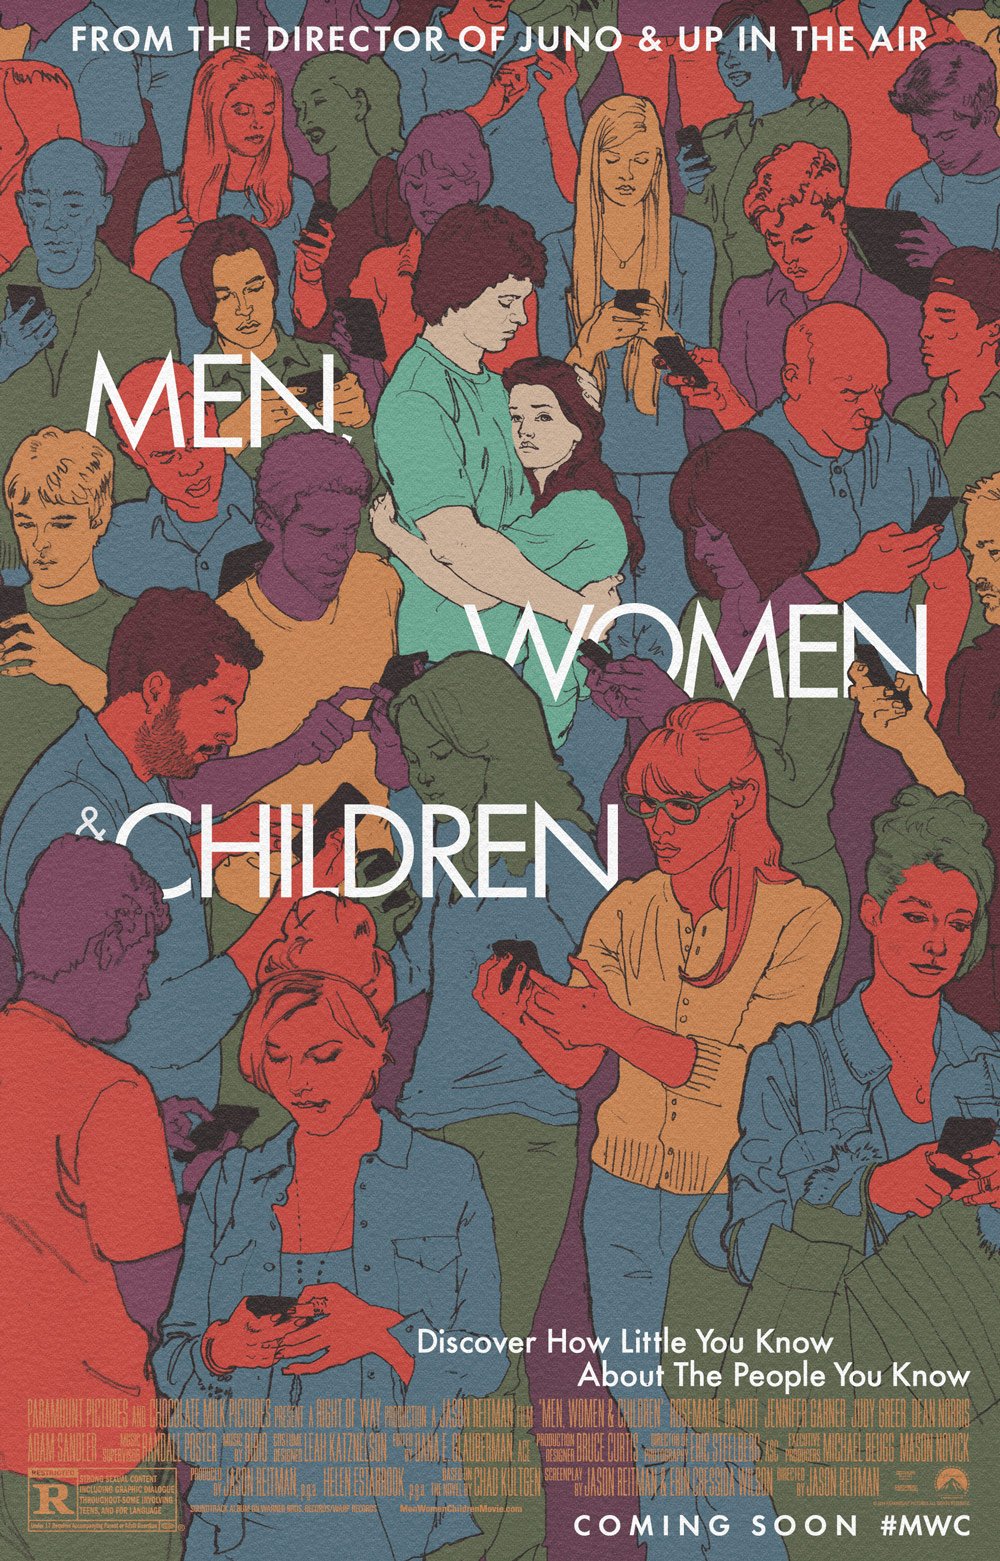 Poster of the movie Men, Women & Children